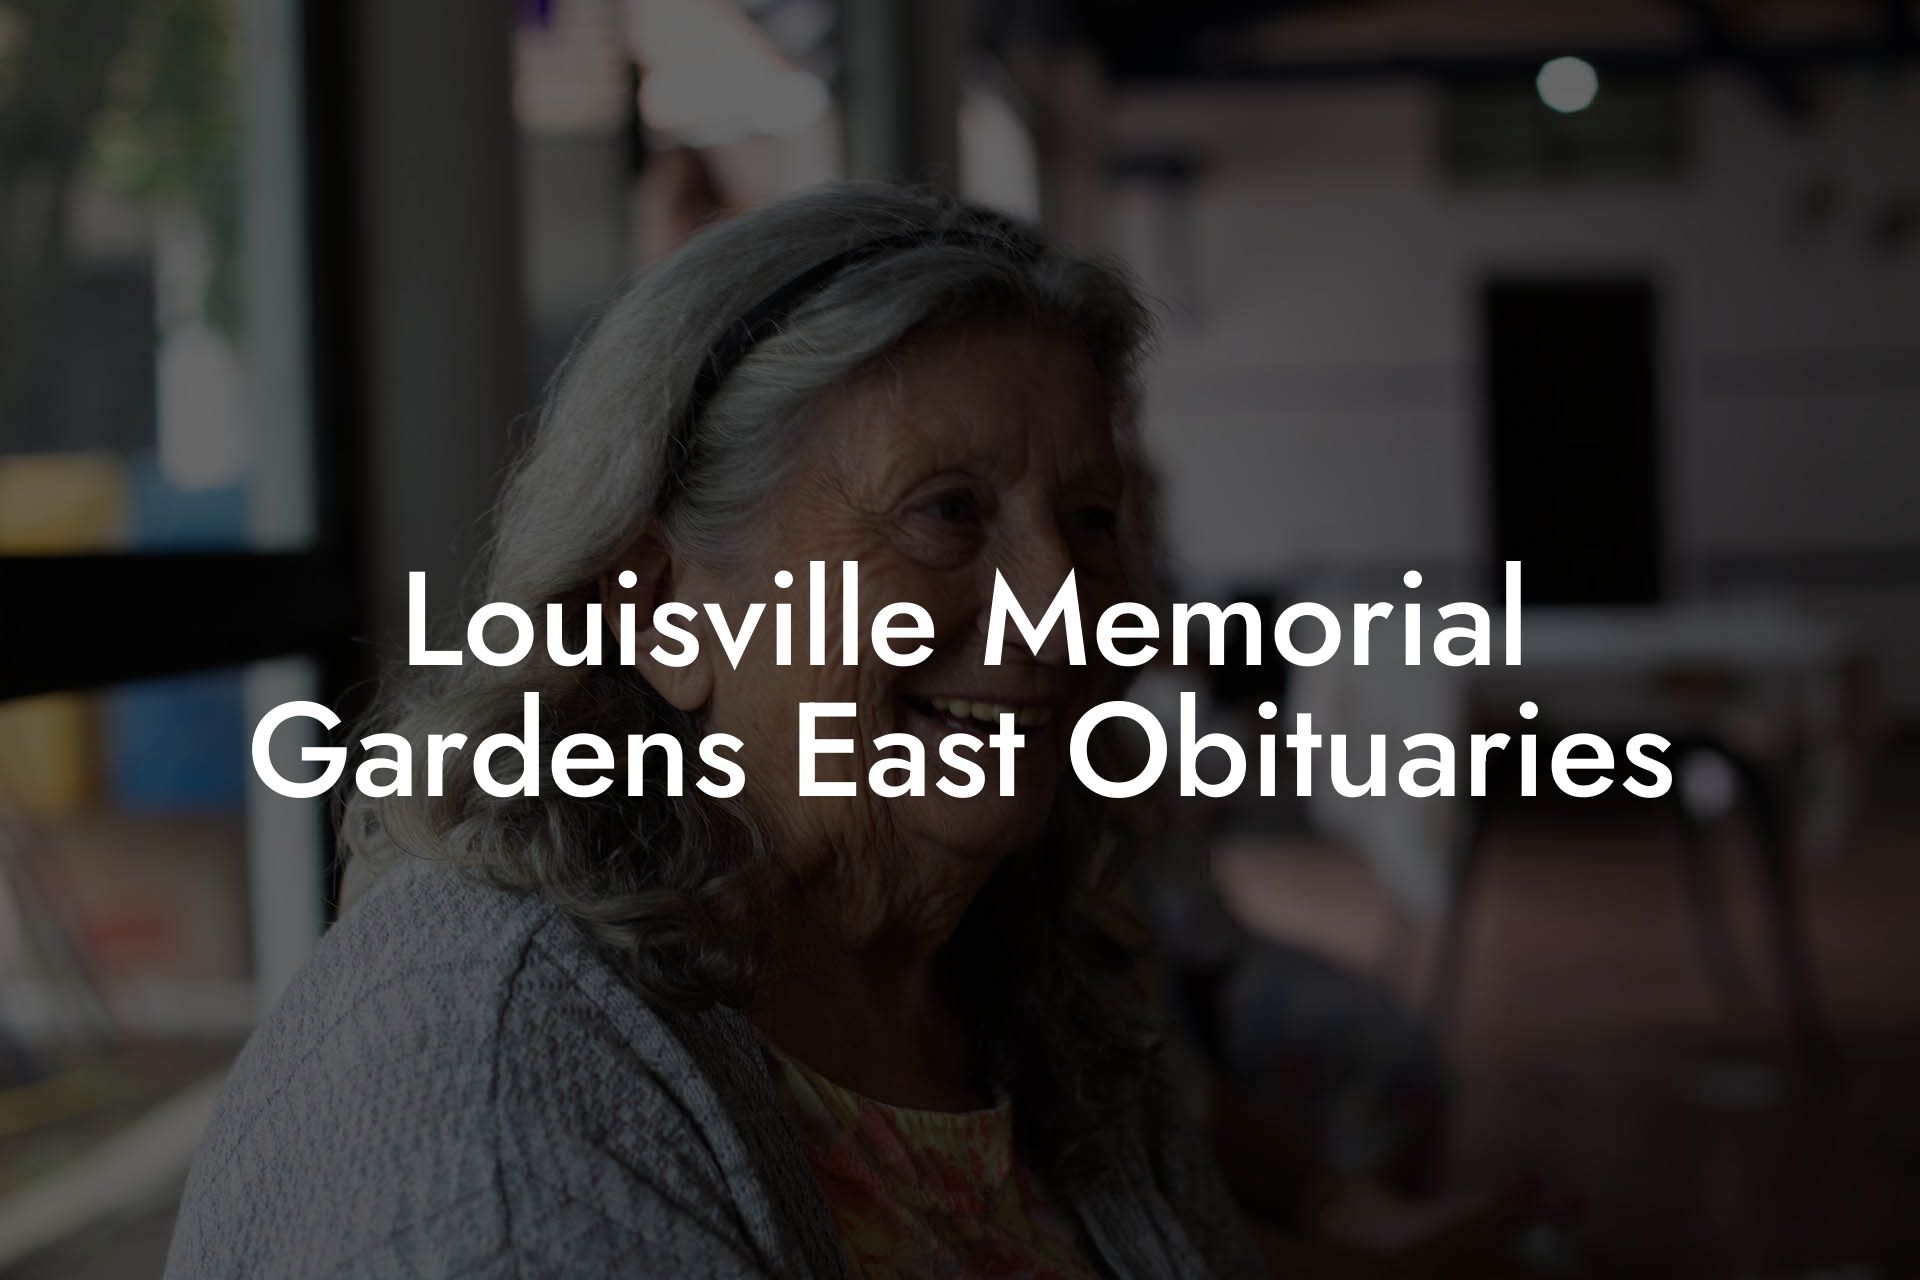 Louisville Memorial Gardens East Obituaries